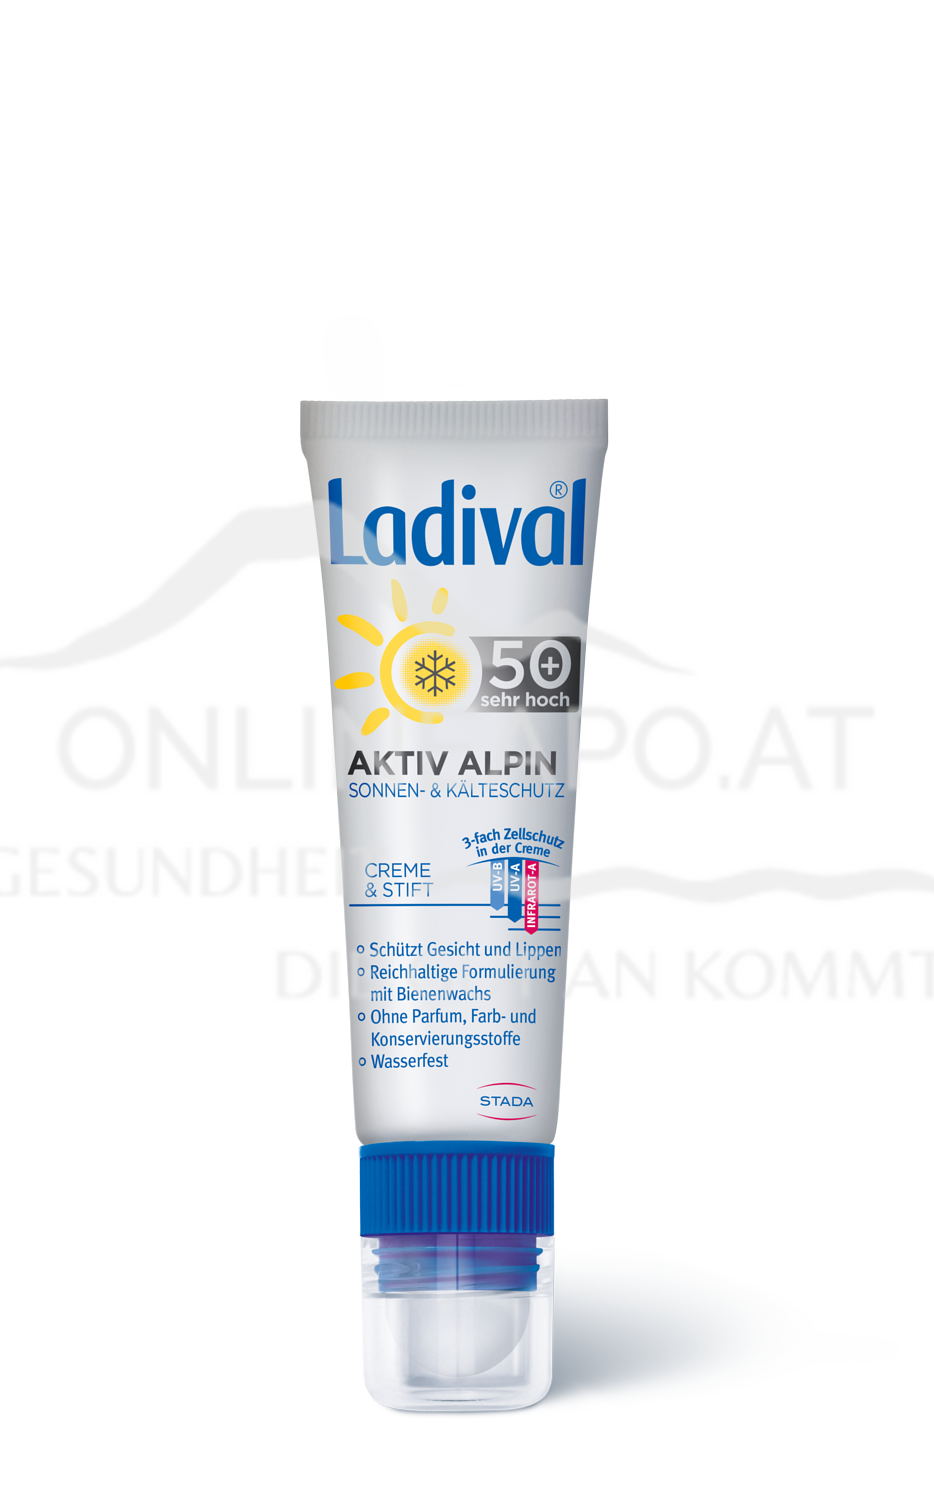 Ladival® 2-in-1 Aktiv Alpin Sonnen- & Kälteschutz